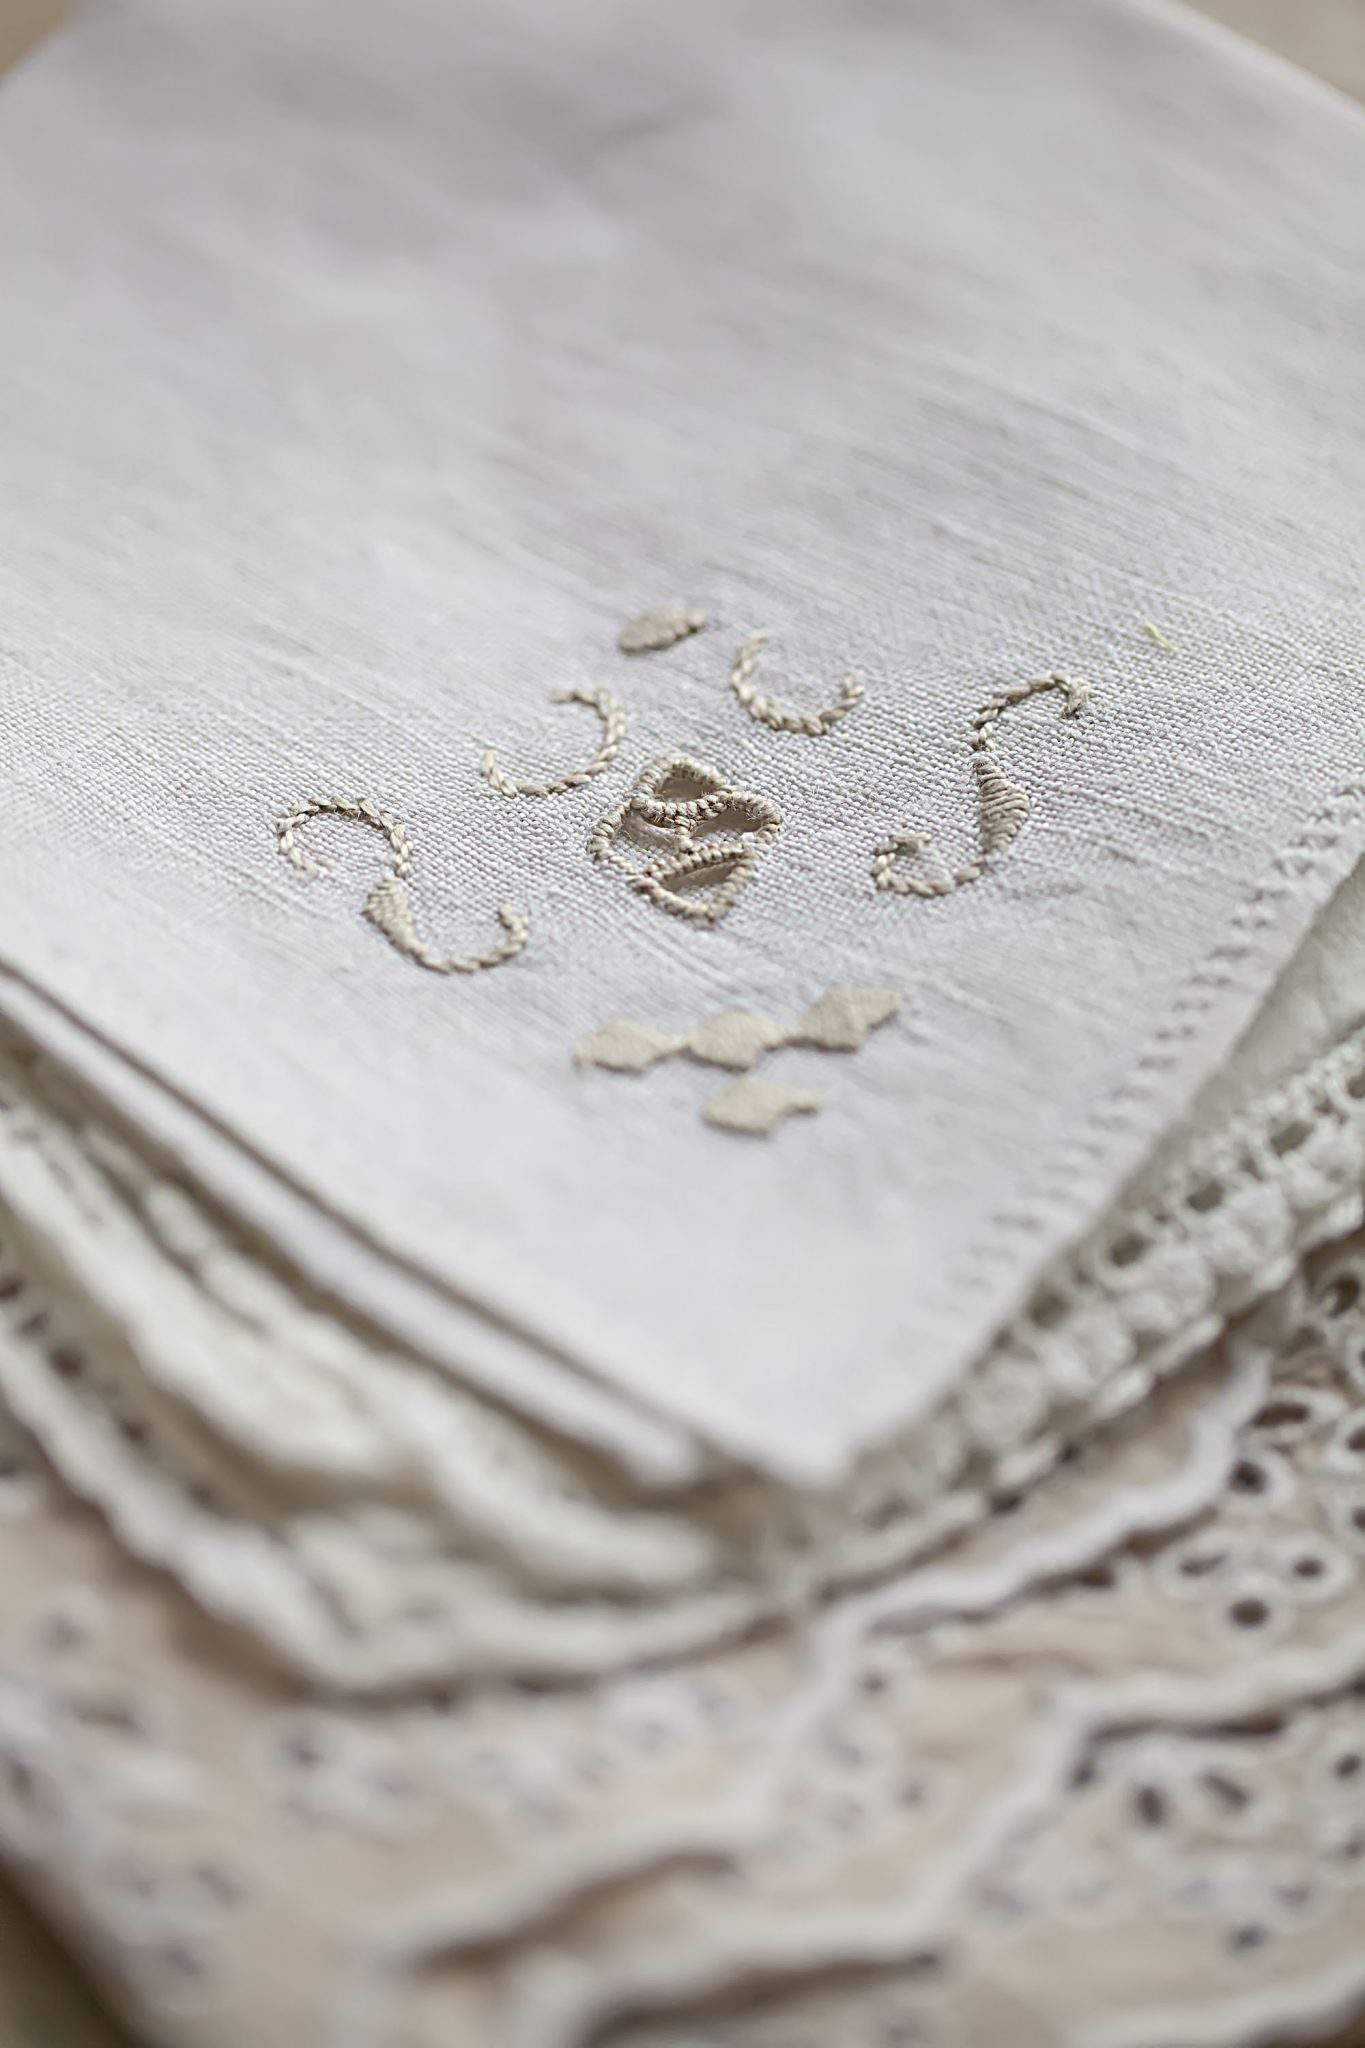 Victorian Embroidery Patterns Celebrate Creativity